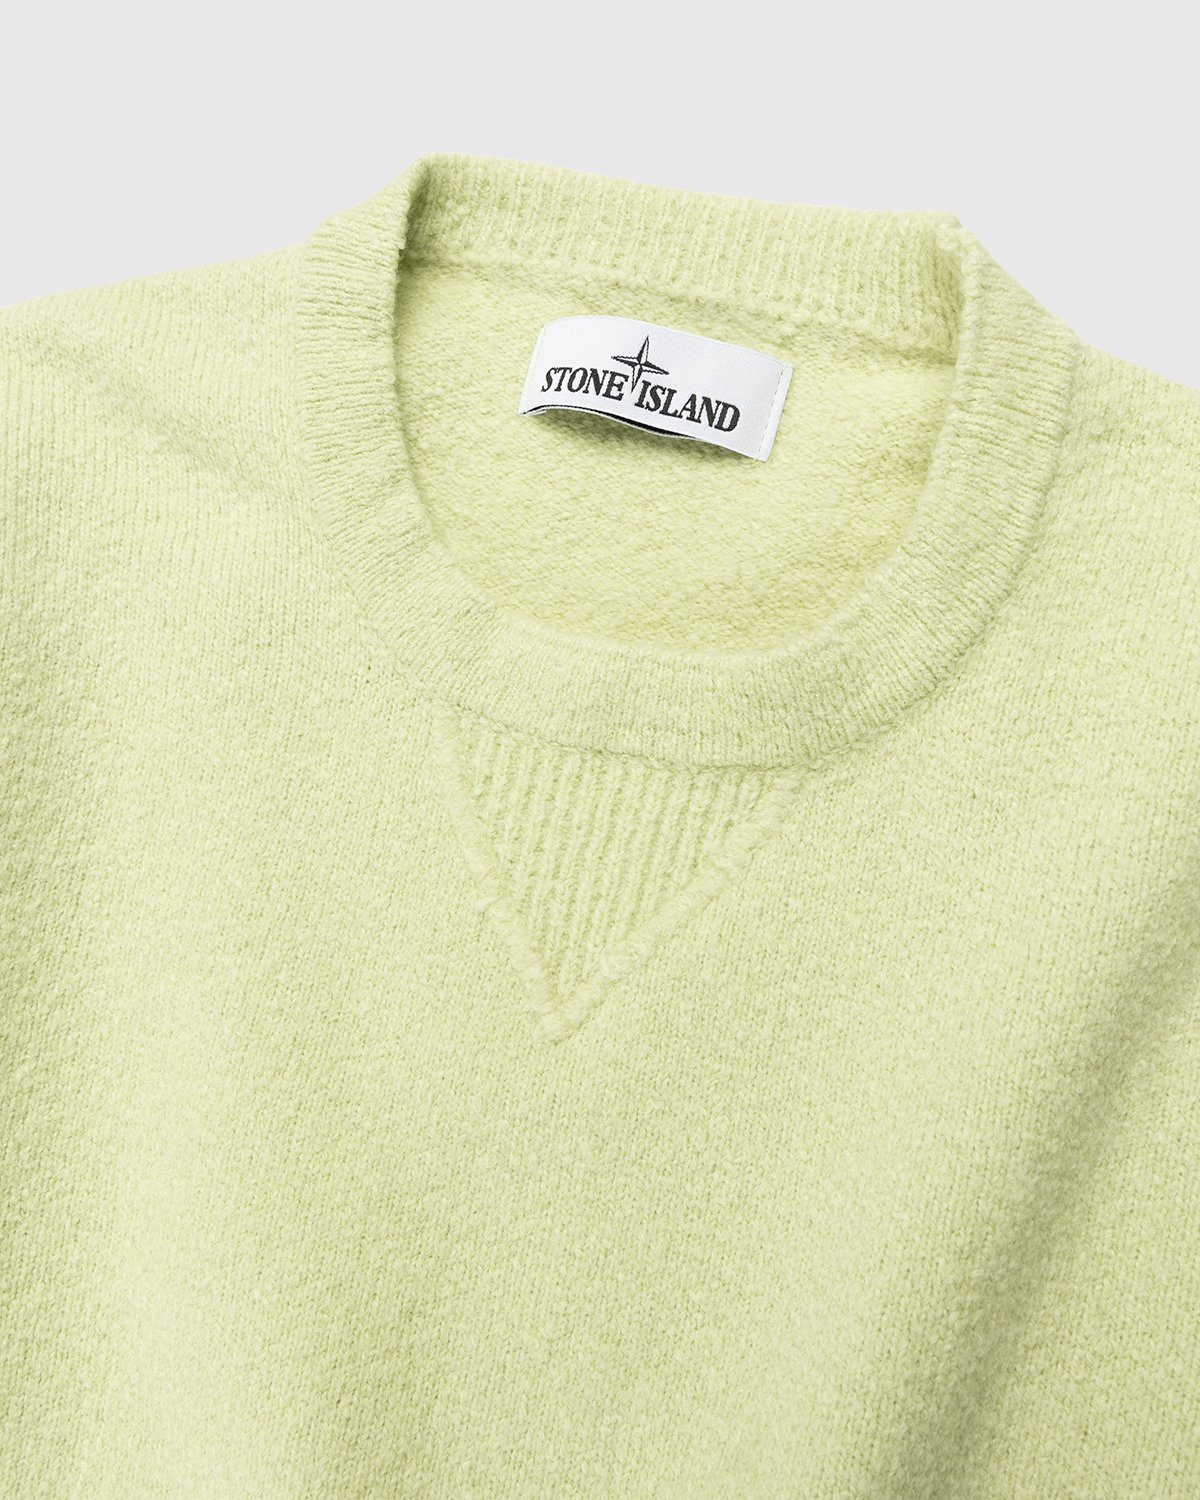 Stone Island - 548D2 Stockinette Stitch Sweater Light Green - Clothing - Green - Image 3